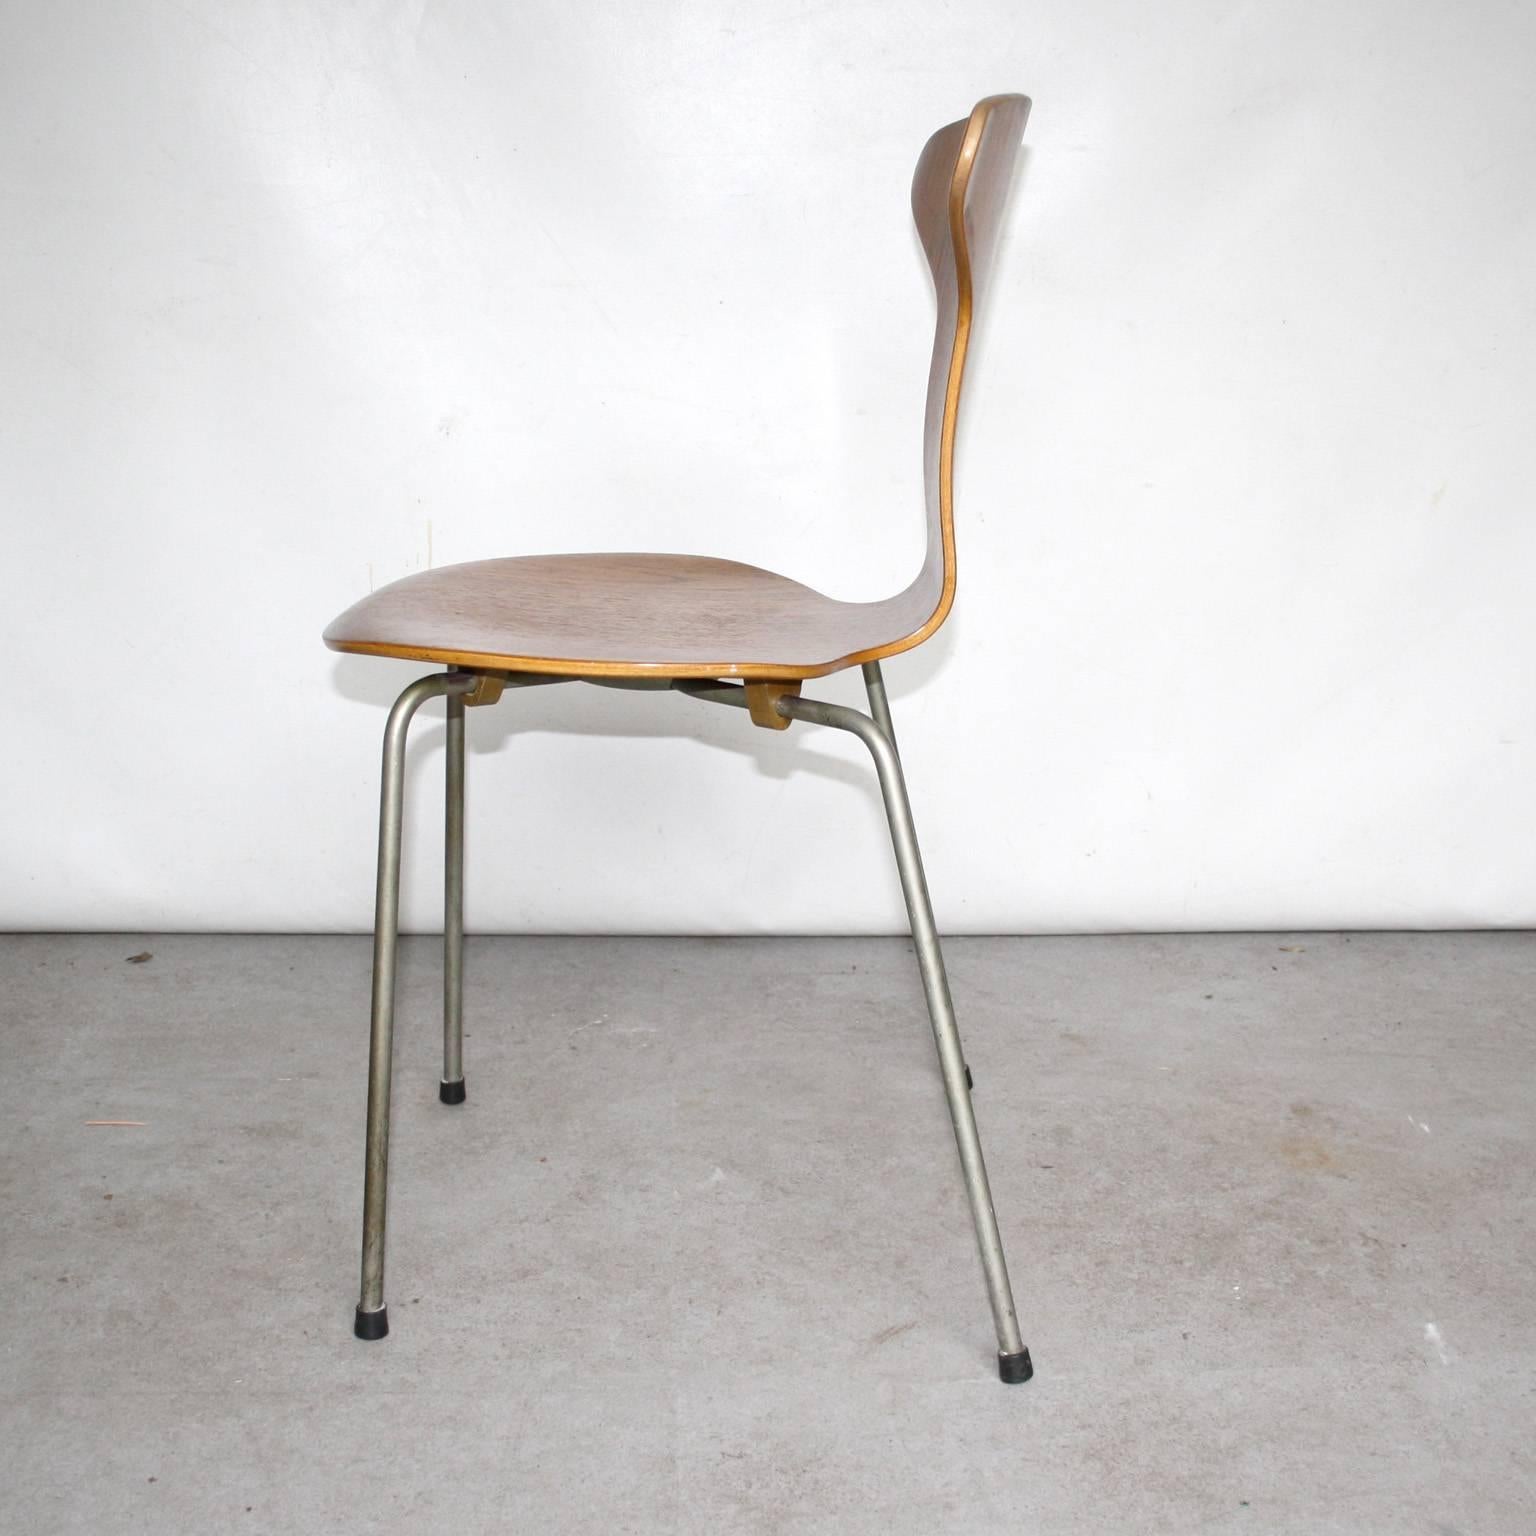 Arne Jacobsen for Fritz Hansen “Mosquito” Dining Chair In Good Condition For Sale In Lijnden, Noord-Holland